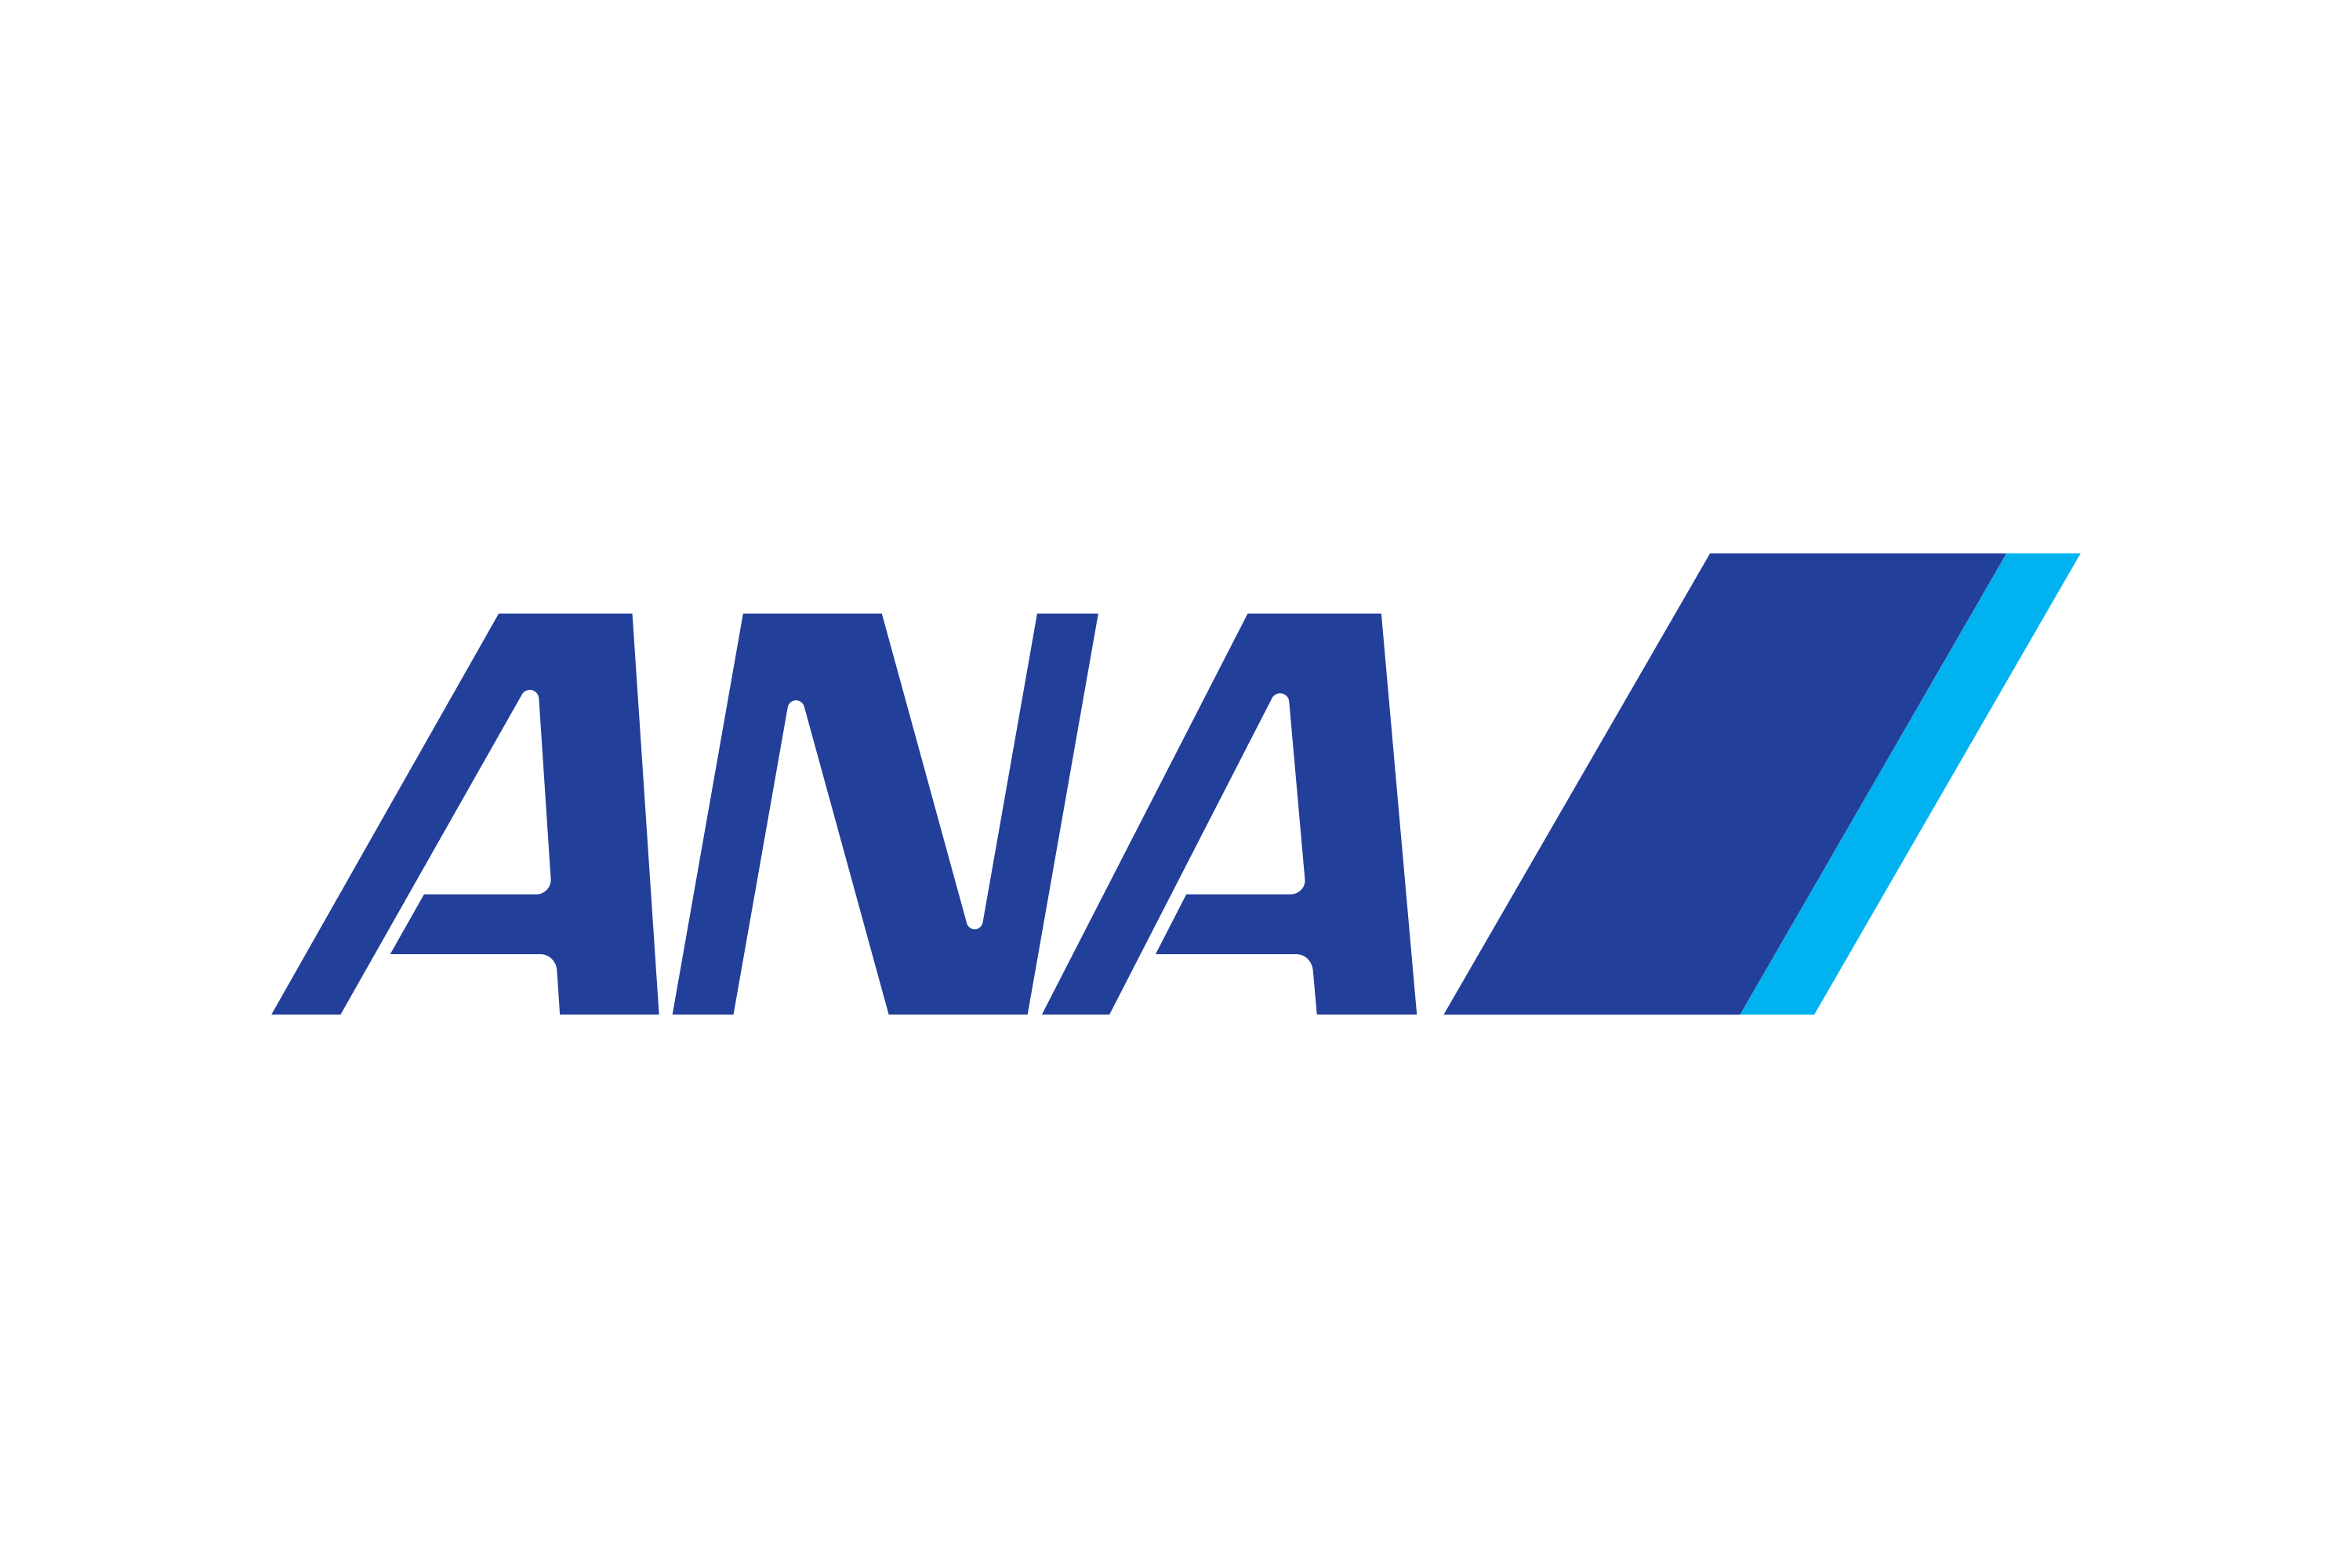 Download All Nippon Airways (ANA, Zennikkū) Logo in SVG Vector or PNG